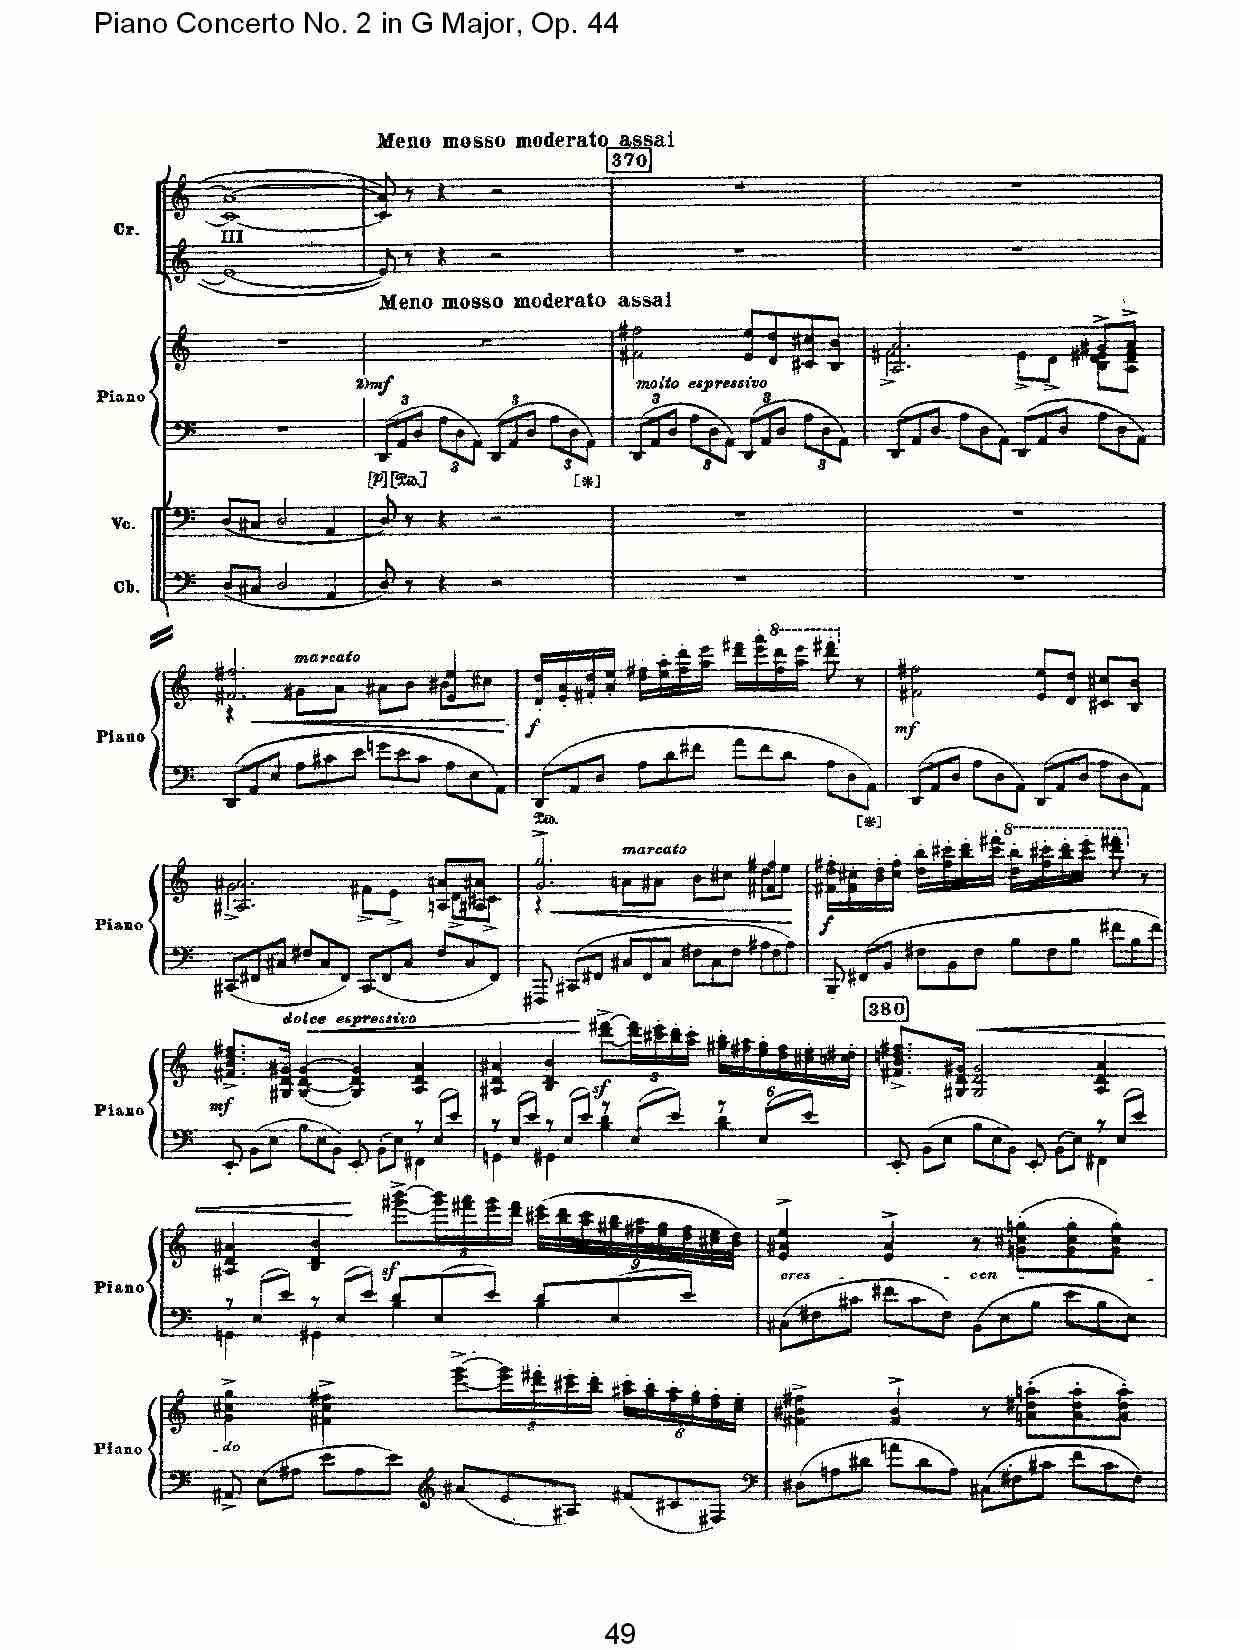 G大调第二钢琴协奏曲, Op.44第一乐章（二）钢琴曲谱（图19）